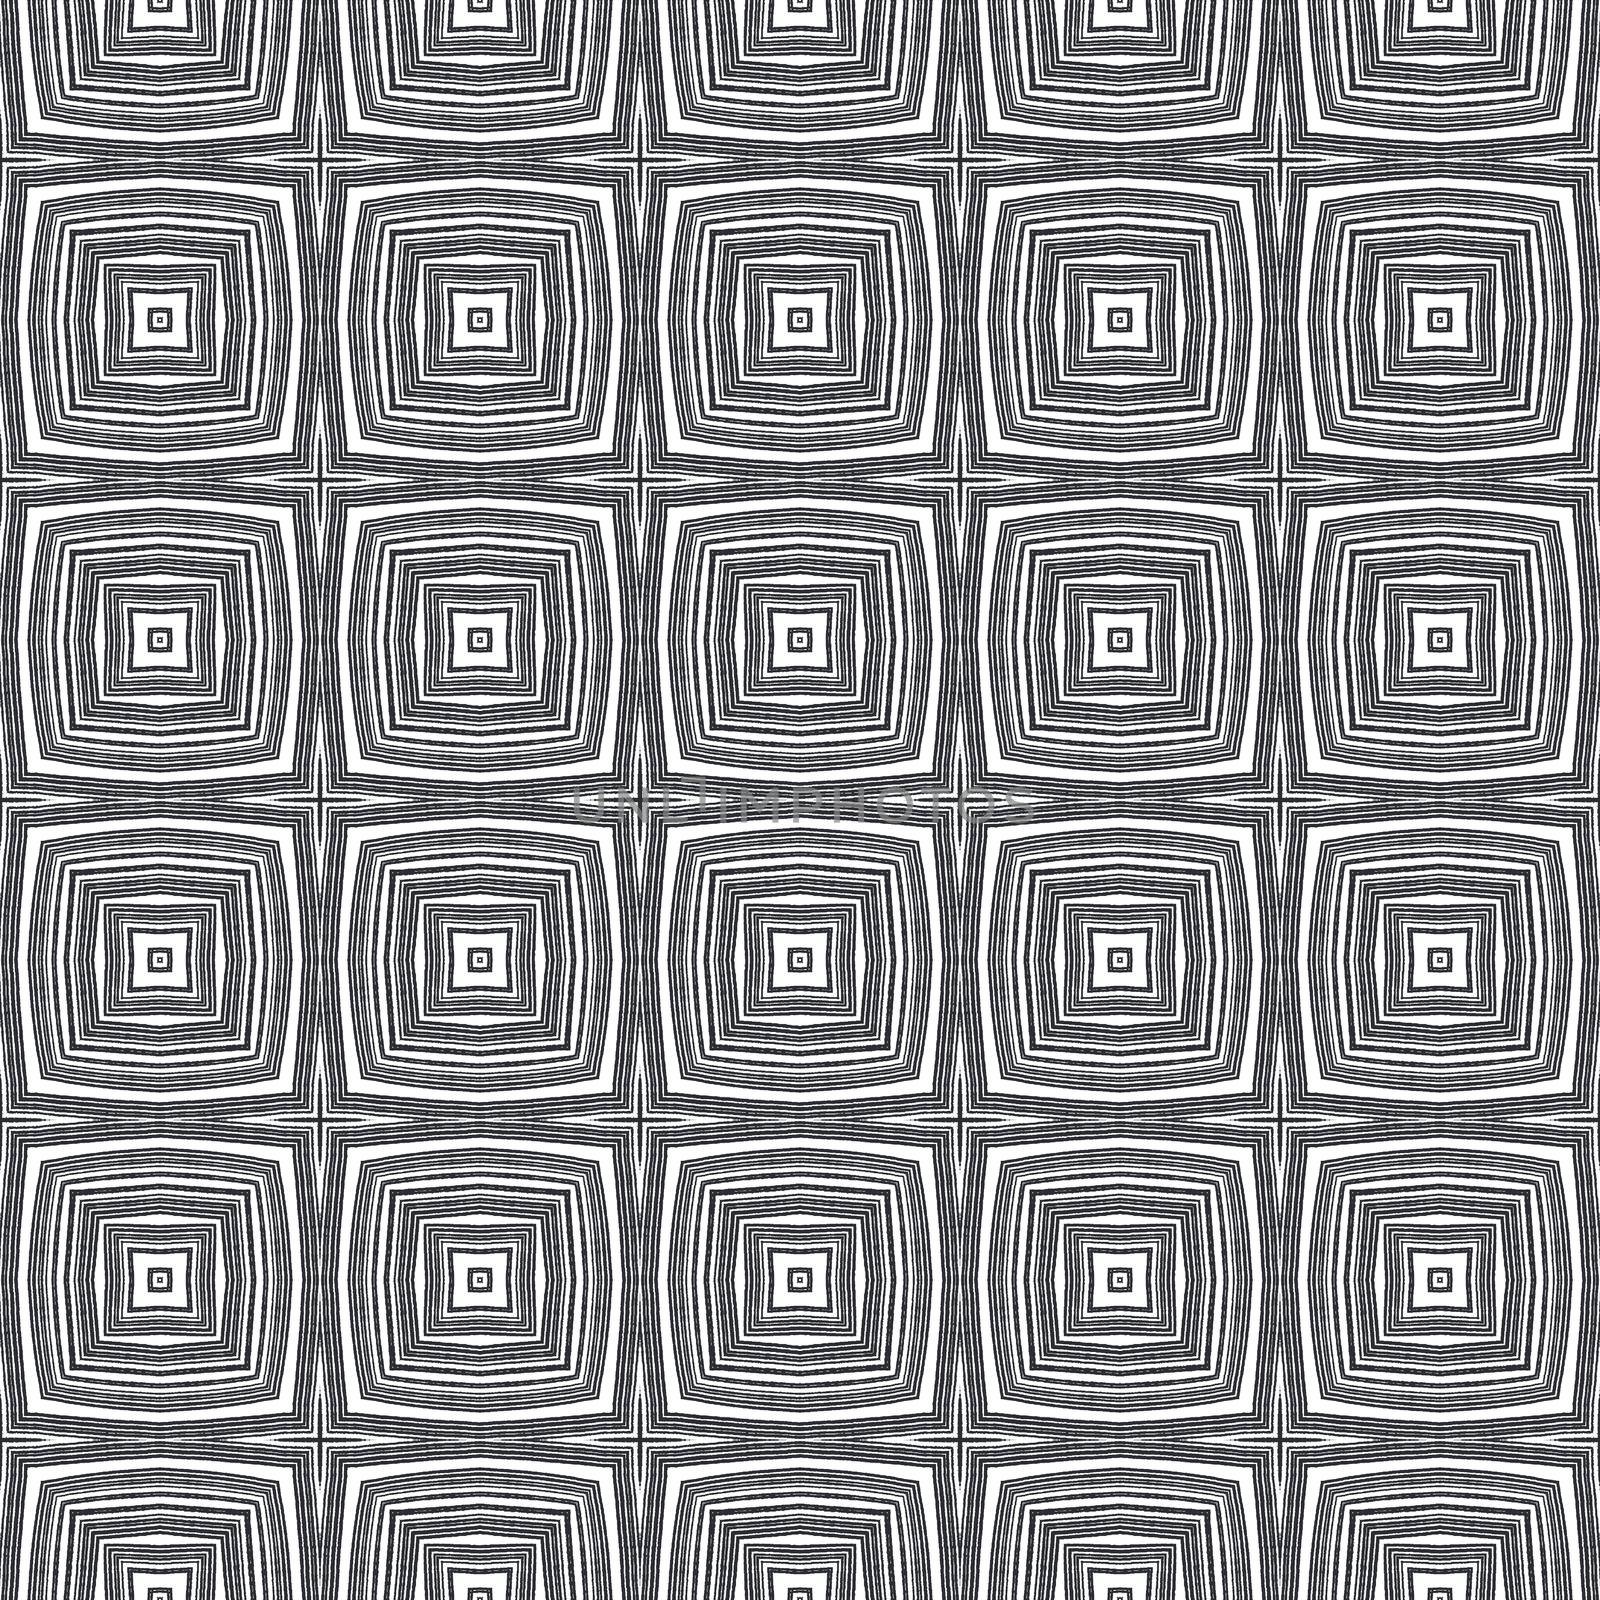 Geometric seamless pattern. Black symmetrical kaleidoscope background. Hand drawn geometric seamless design. Textile ready classy print, swimwear fabric, wallpaper, wrapping.